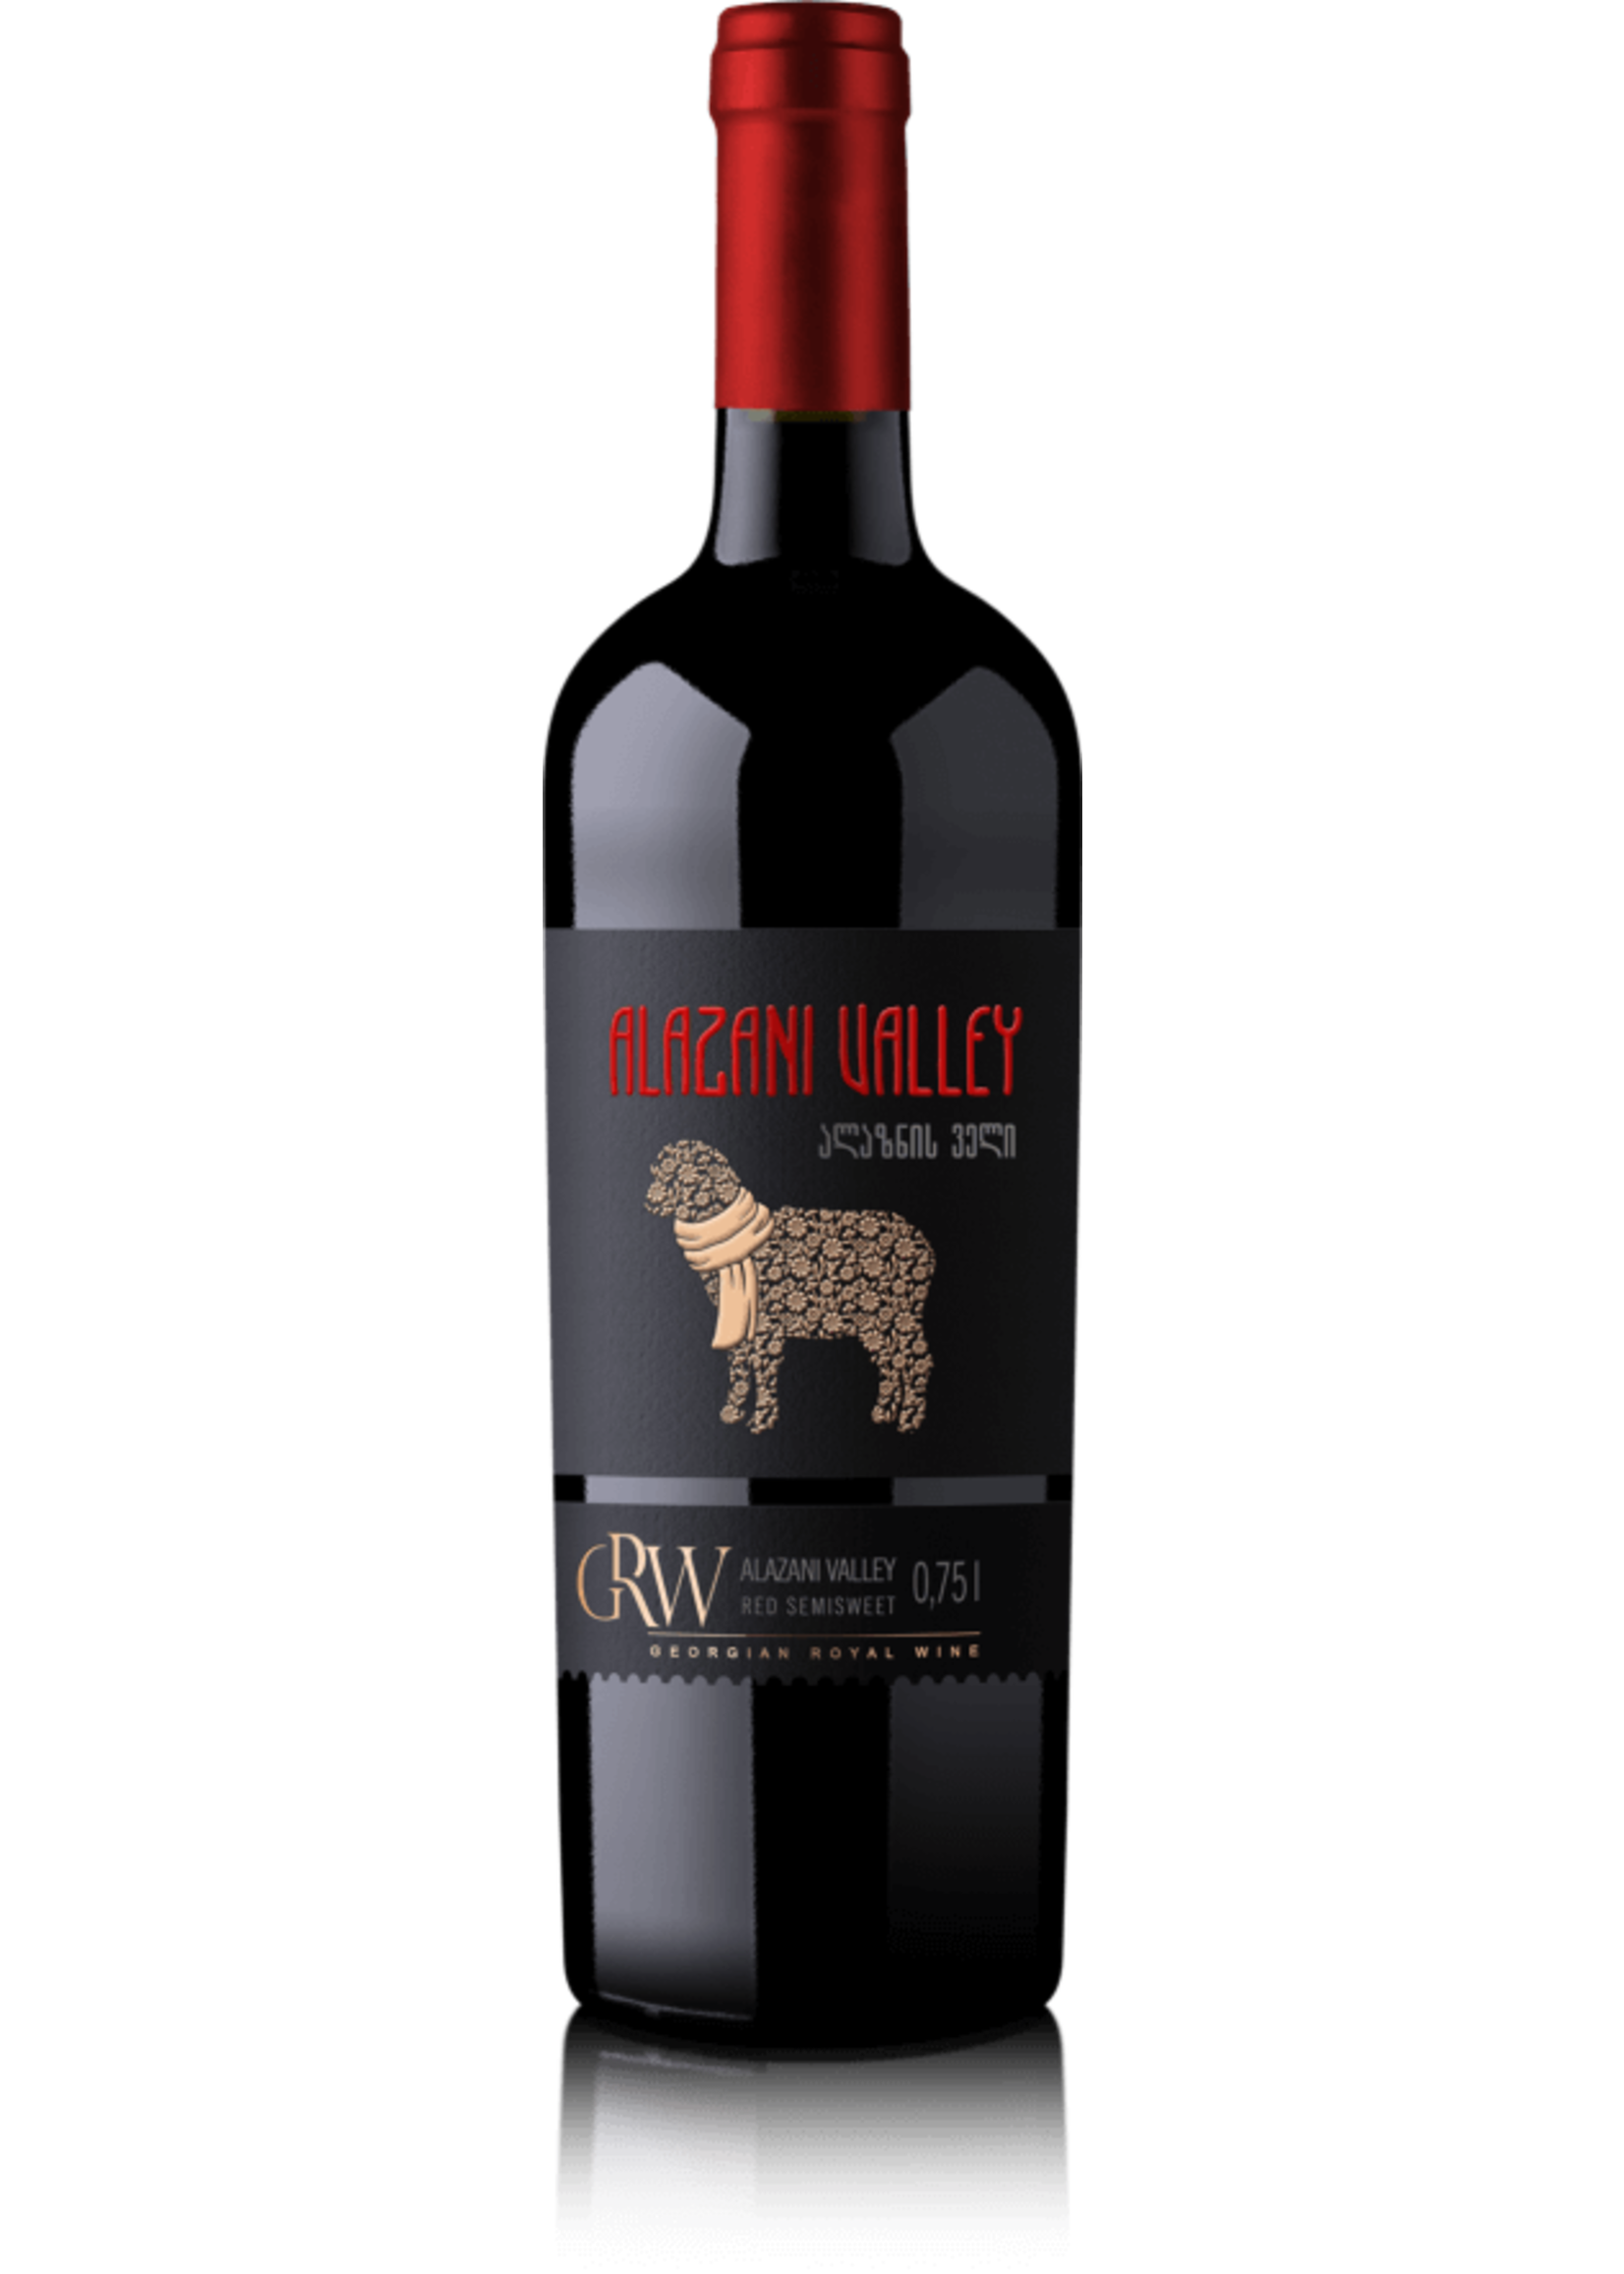 GRW GRW / Georgia Royal Wines Alazani Valley Red Semi-Sweet 2020 / 750mL